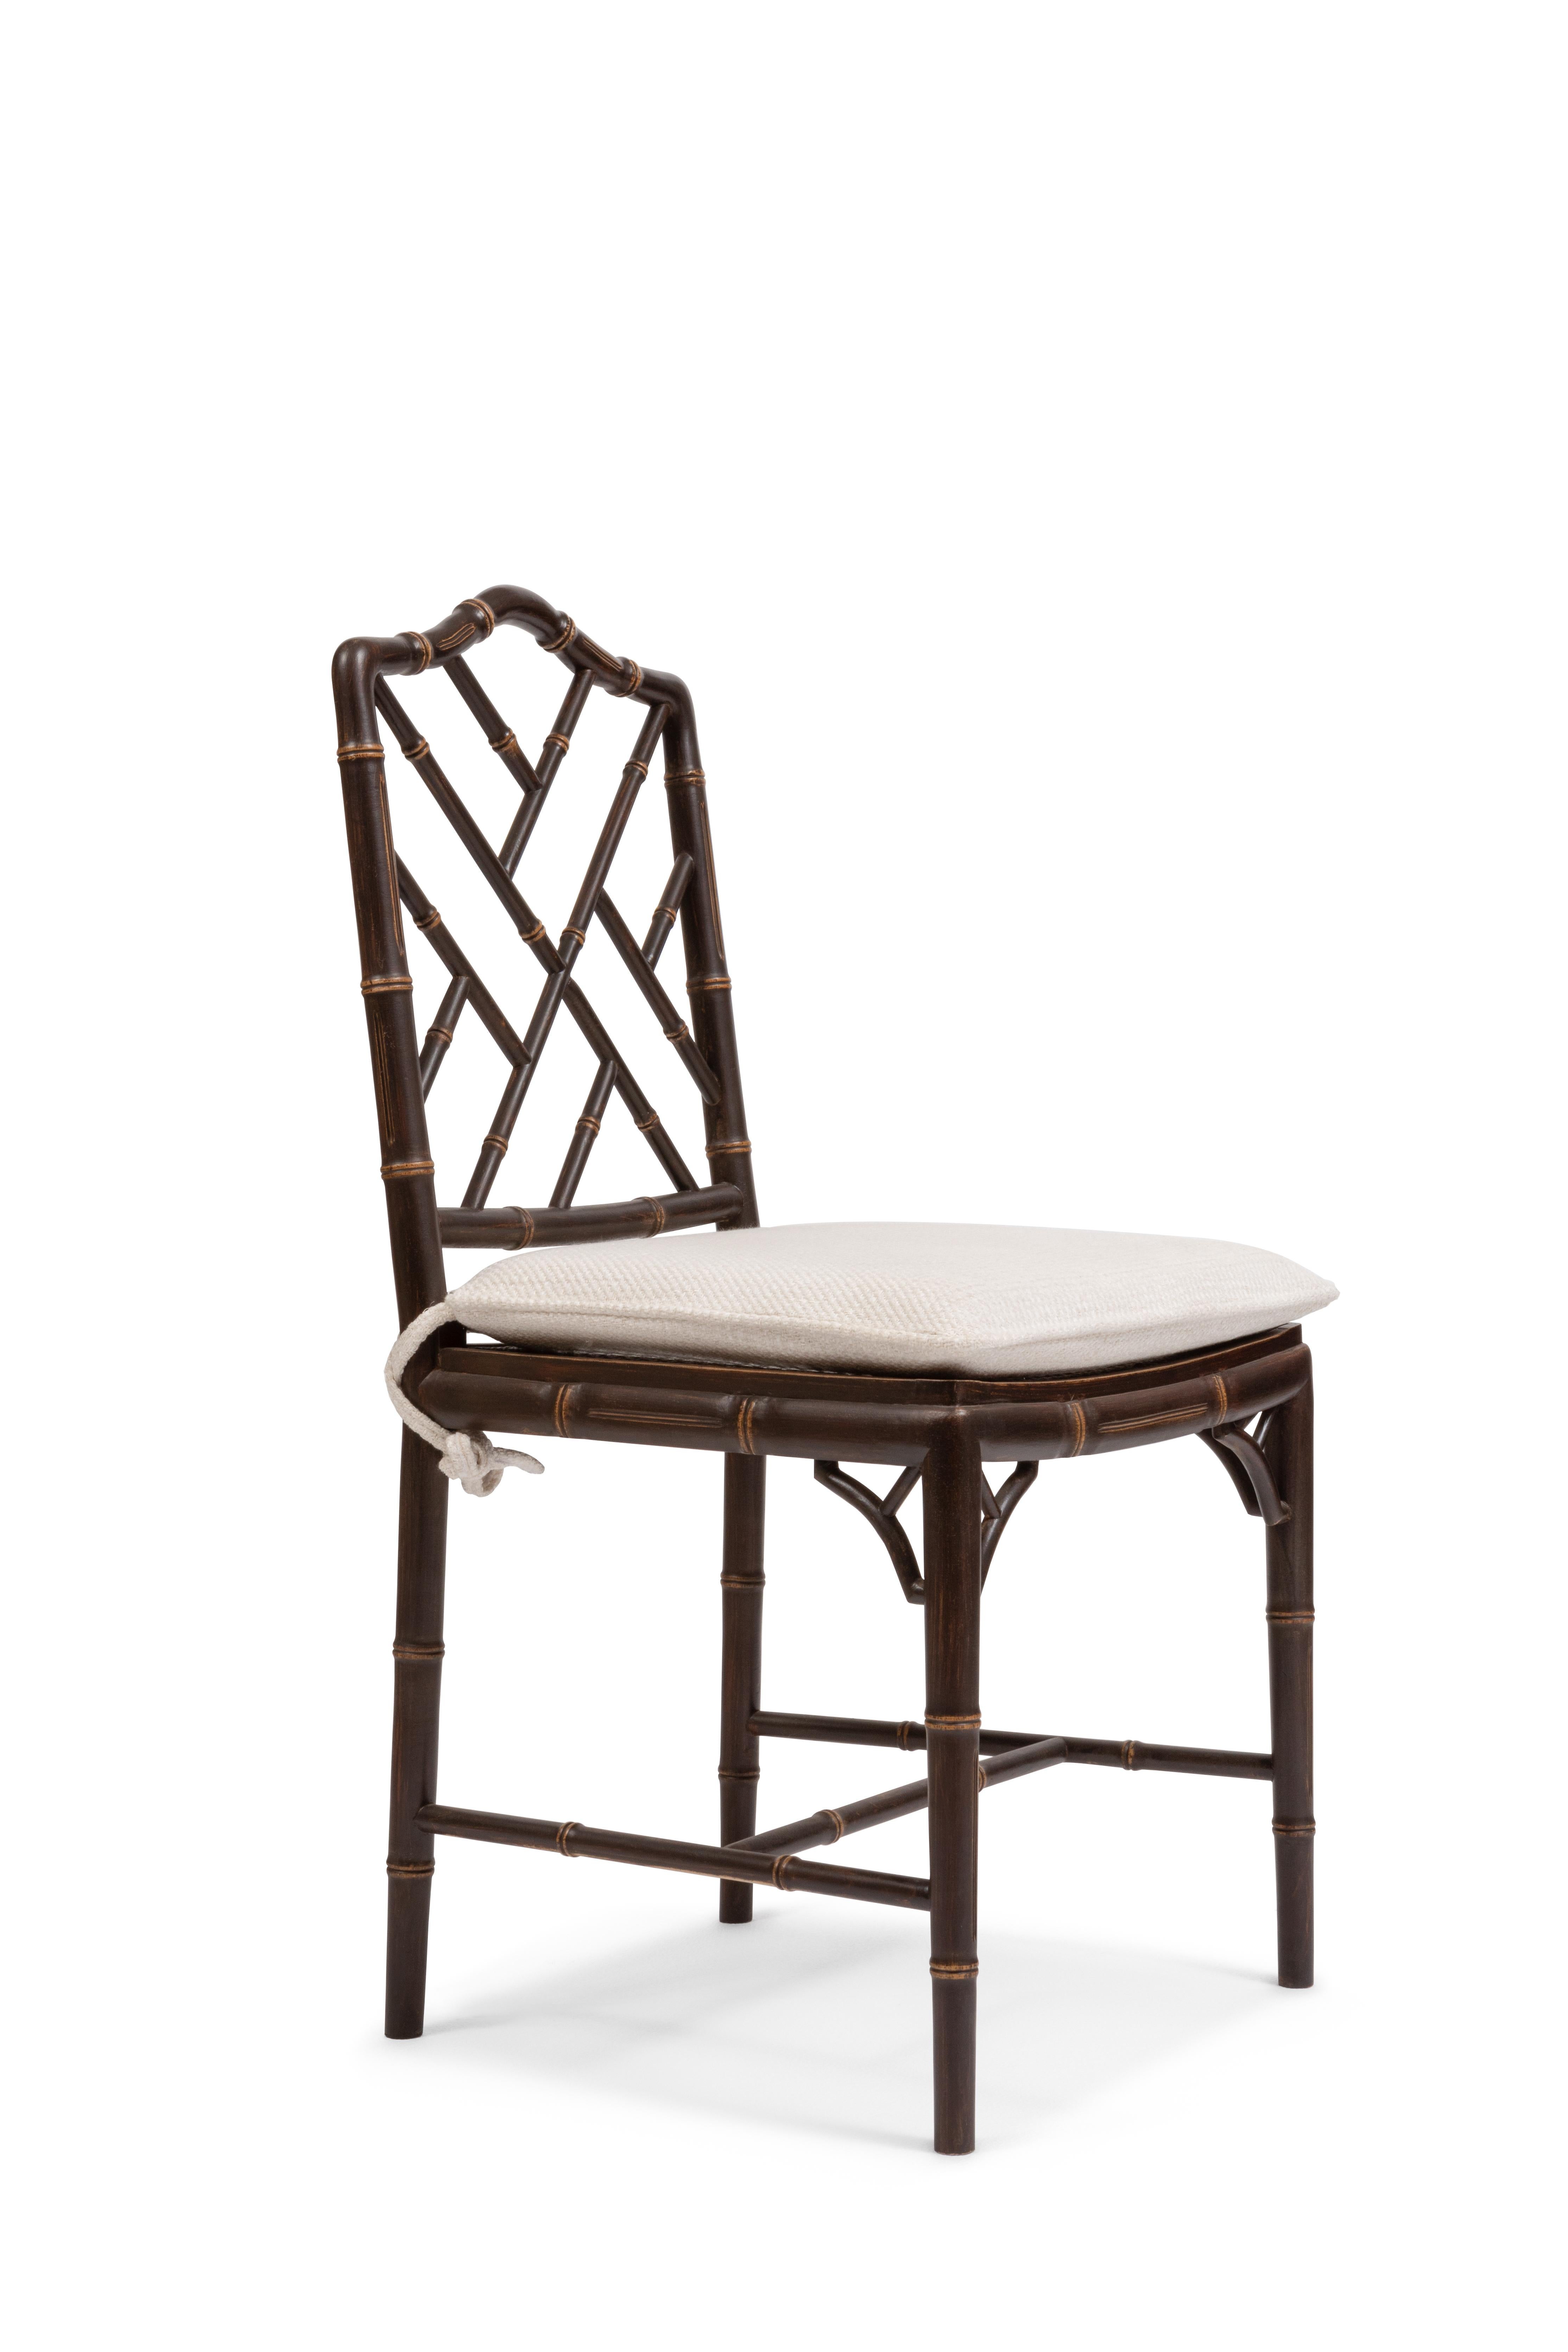 china jiuzhi chair frame